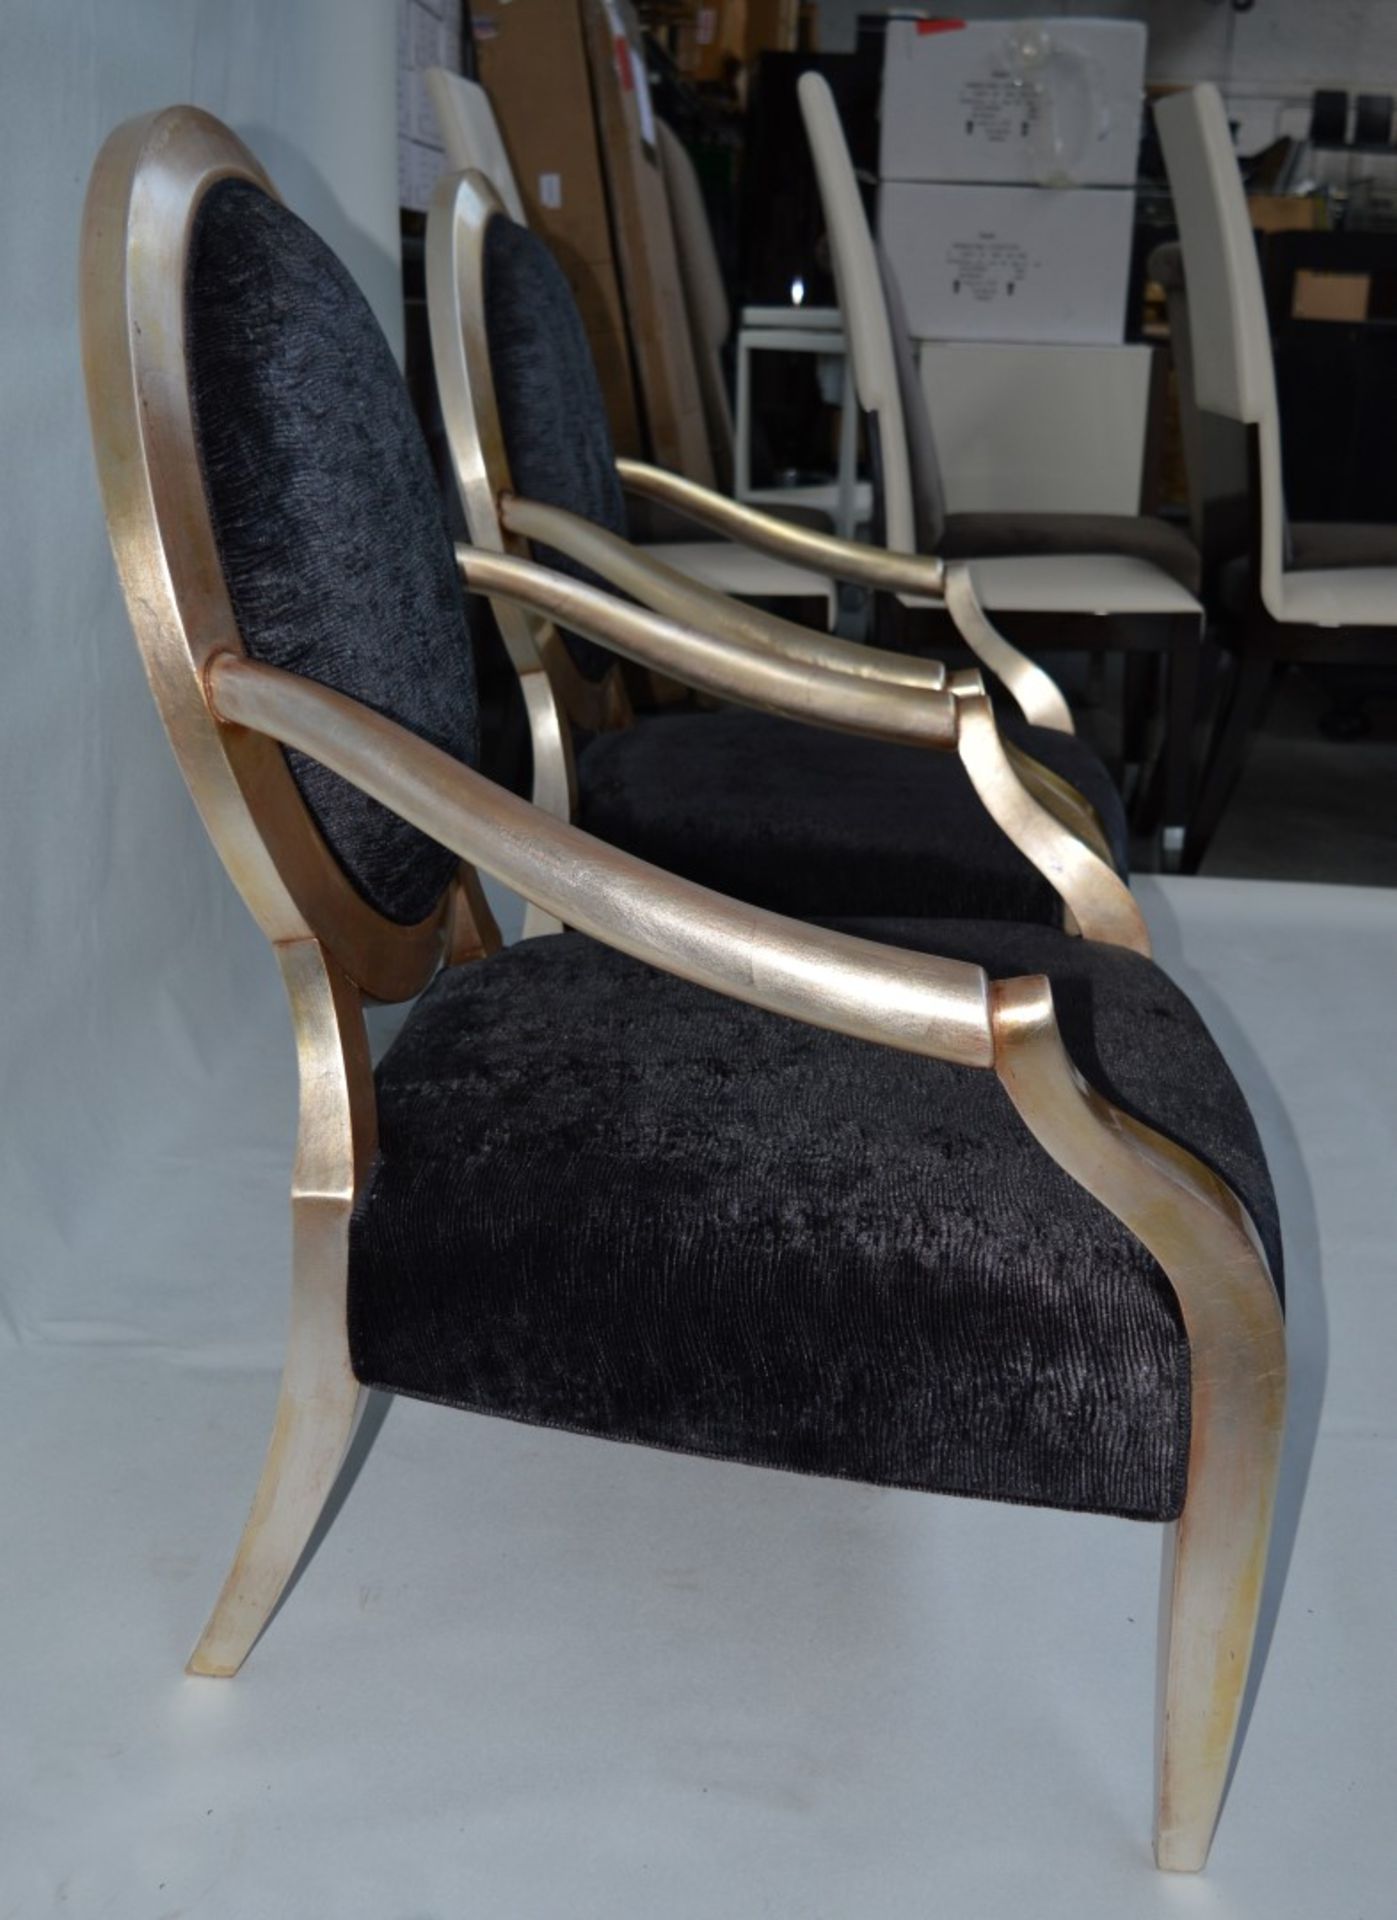 2 x Duresta Nero Chairs - individual Fabric - CL08 - Location Altrincham, WA14 - Image 4 of 7